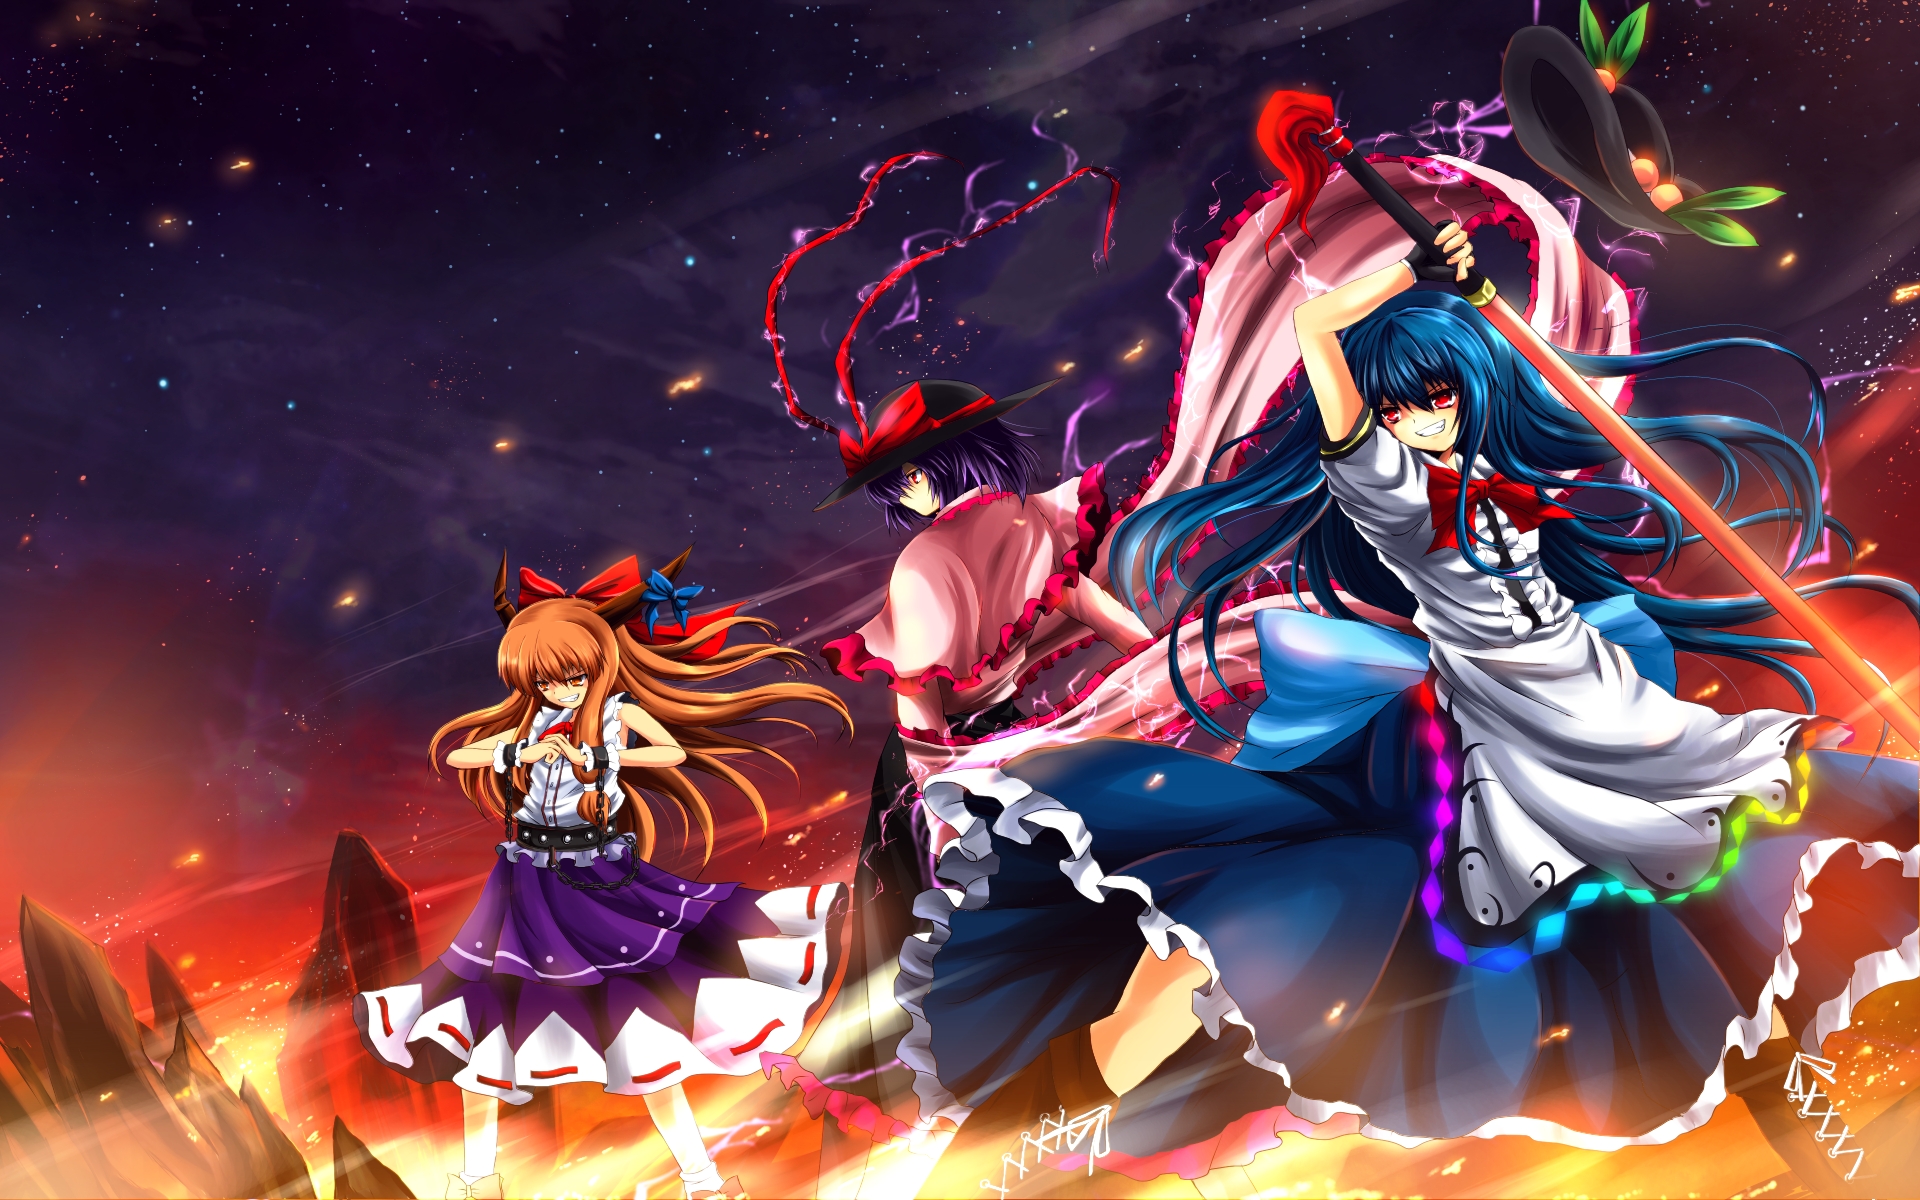 Laden Sie das Animes, Tuhu, Suika Ibuki, Tenshi Hinanawi, Iku Nagae-Bild kostenlos auf Ihren PC-Desktop herunter